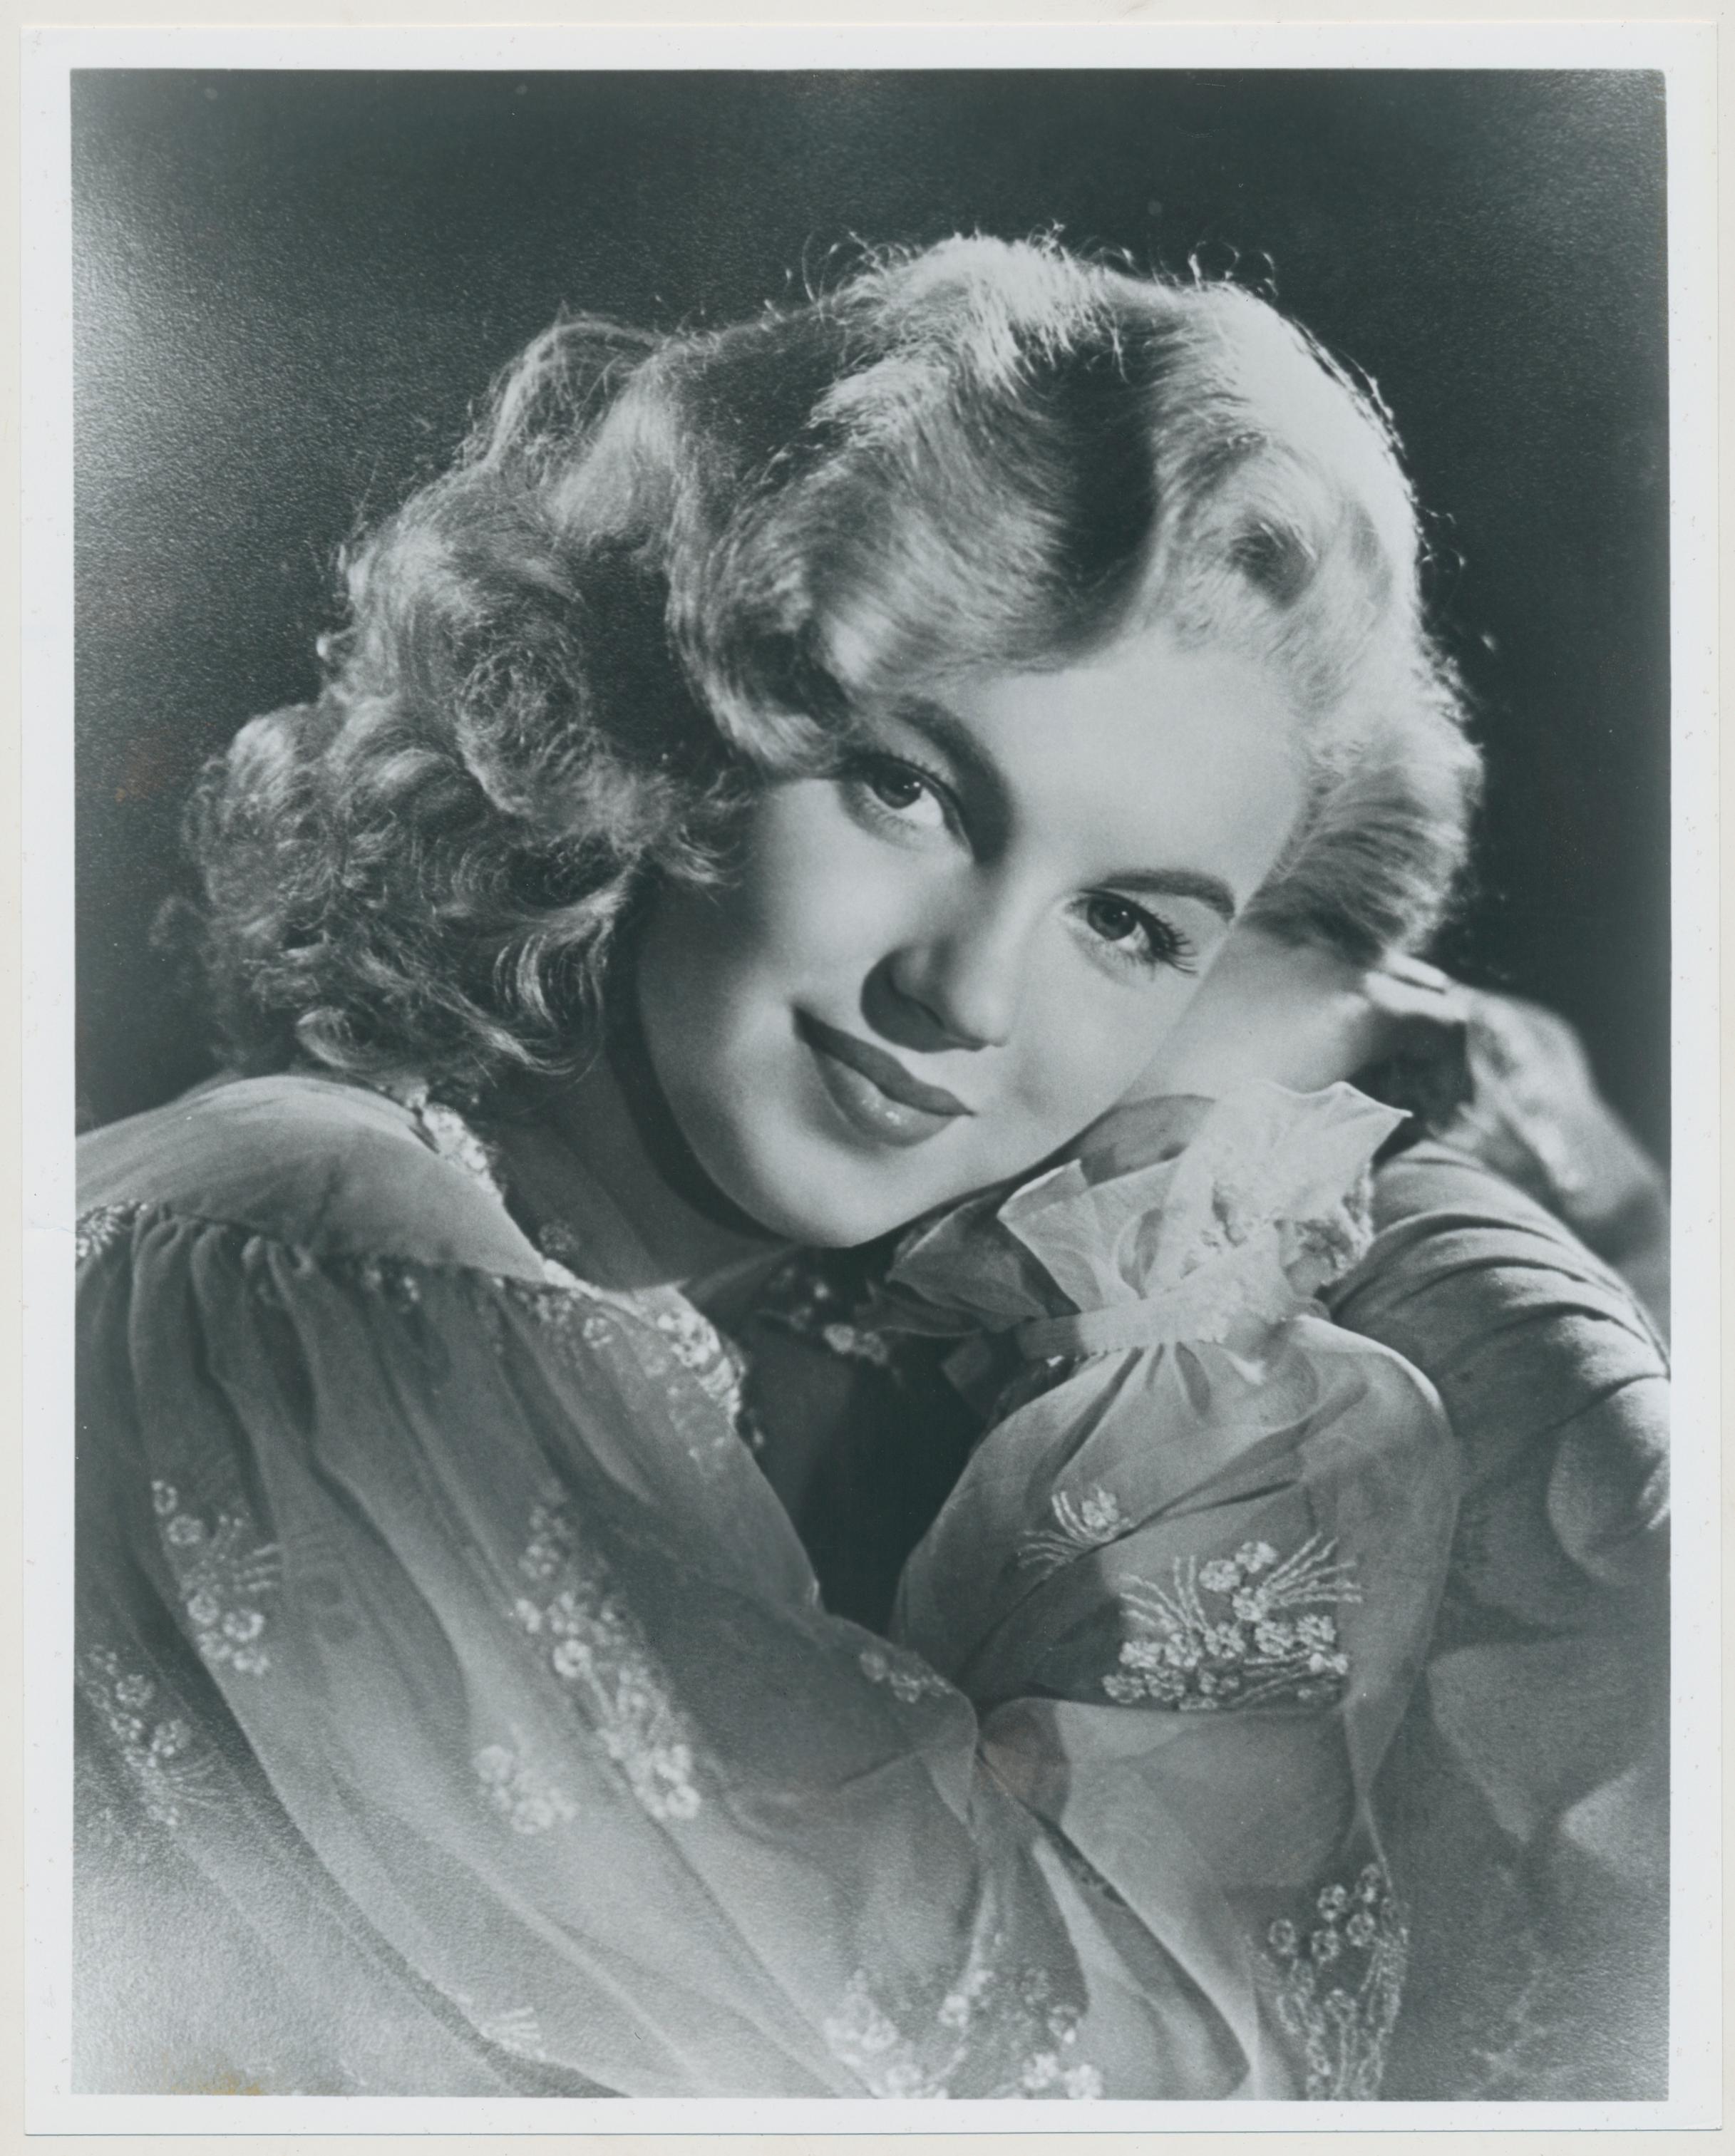 Unknown Portrait Photograph - Marilyn Monroe Studio Shoot, 1950s, 20, 2 x 25 cm